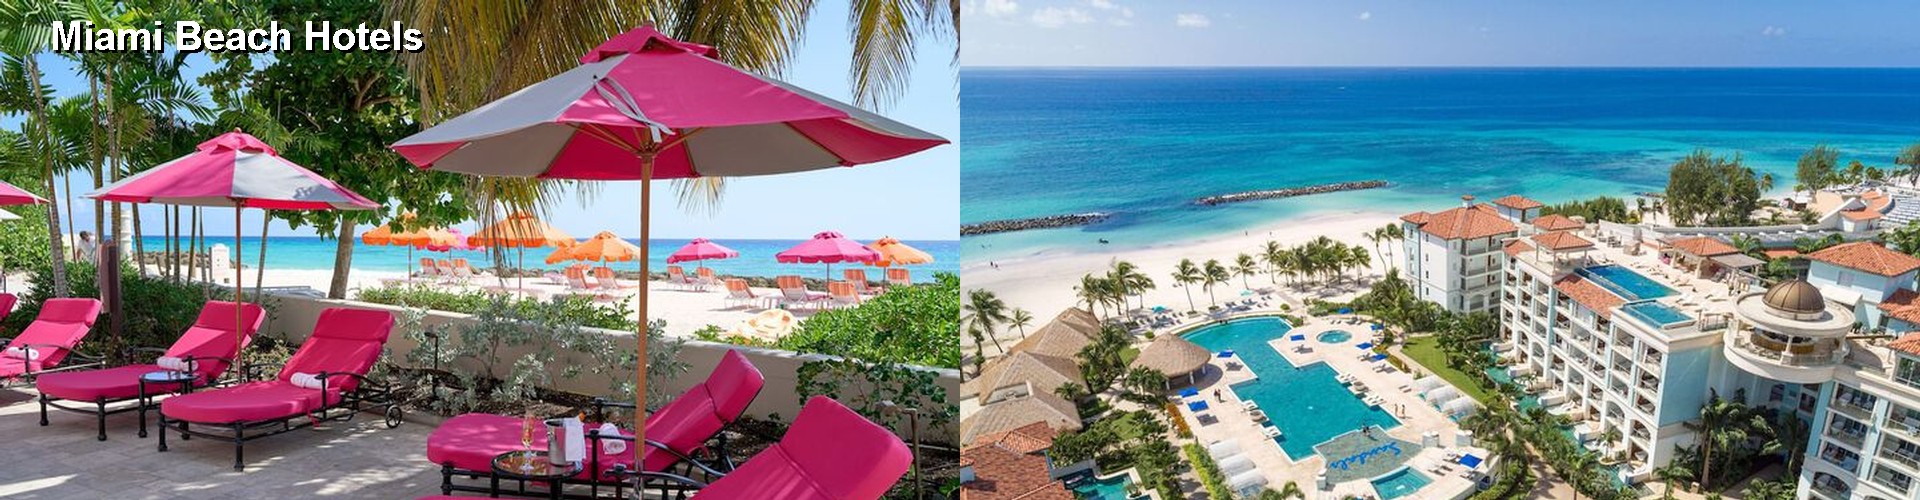 4 Best Hotels near Miami Beach